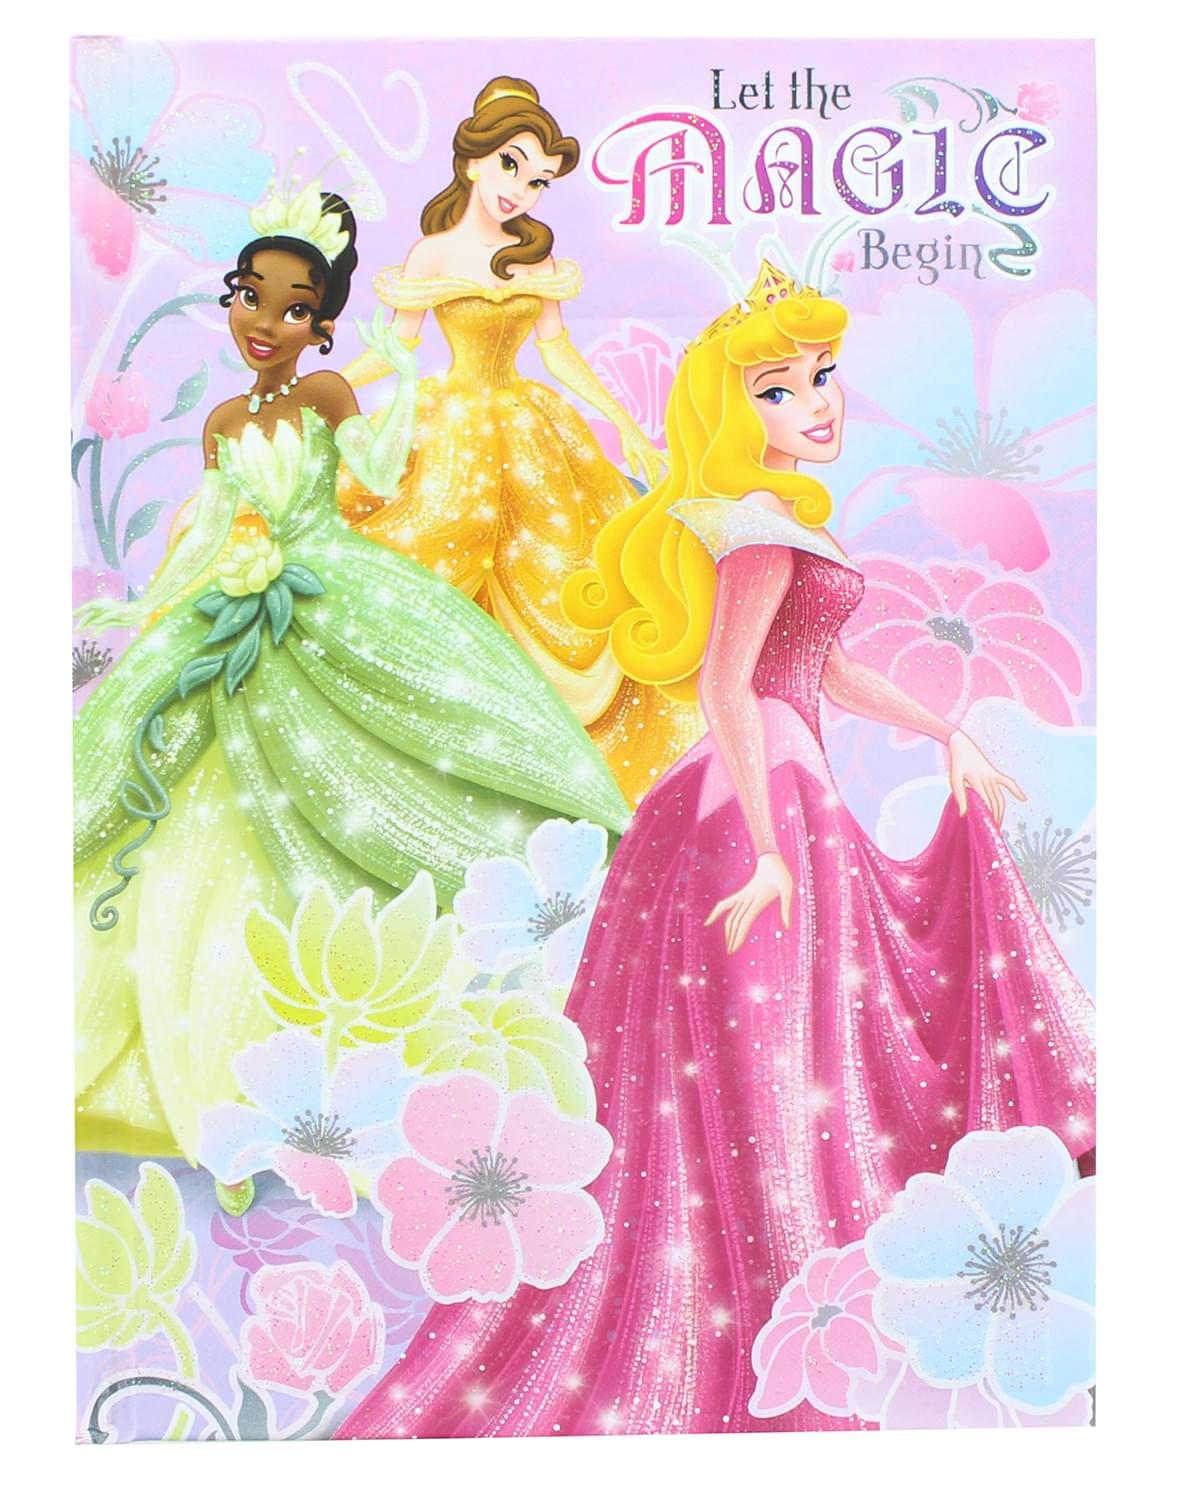 Disney Enchanted Princesses 5x7 Inch Hardcover Journal